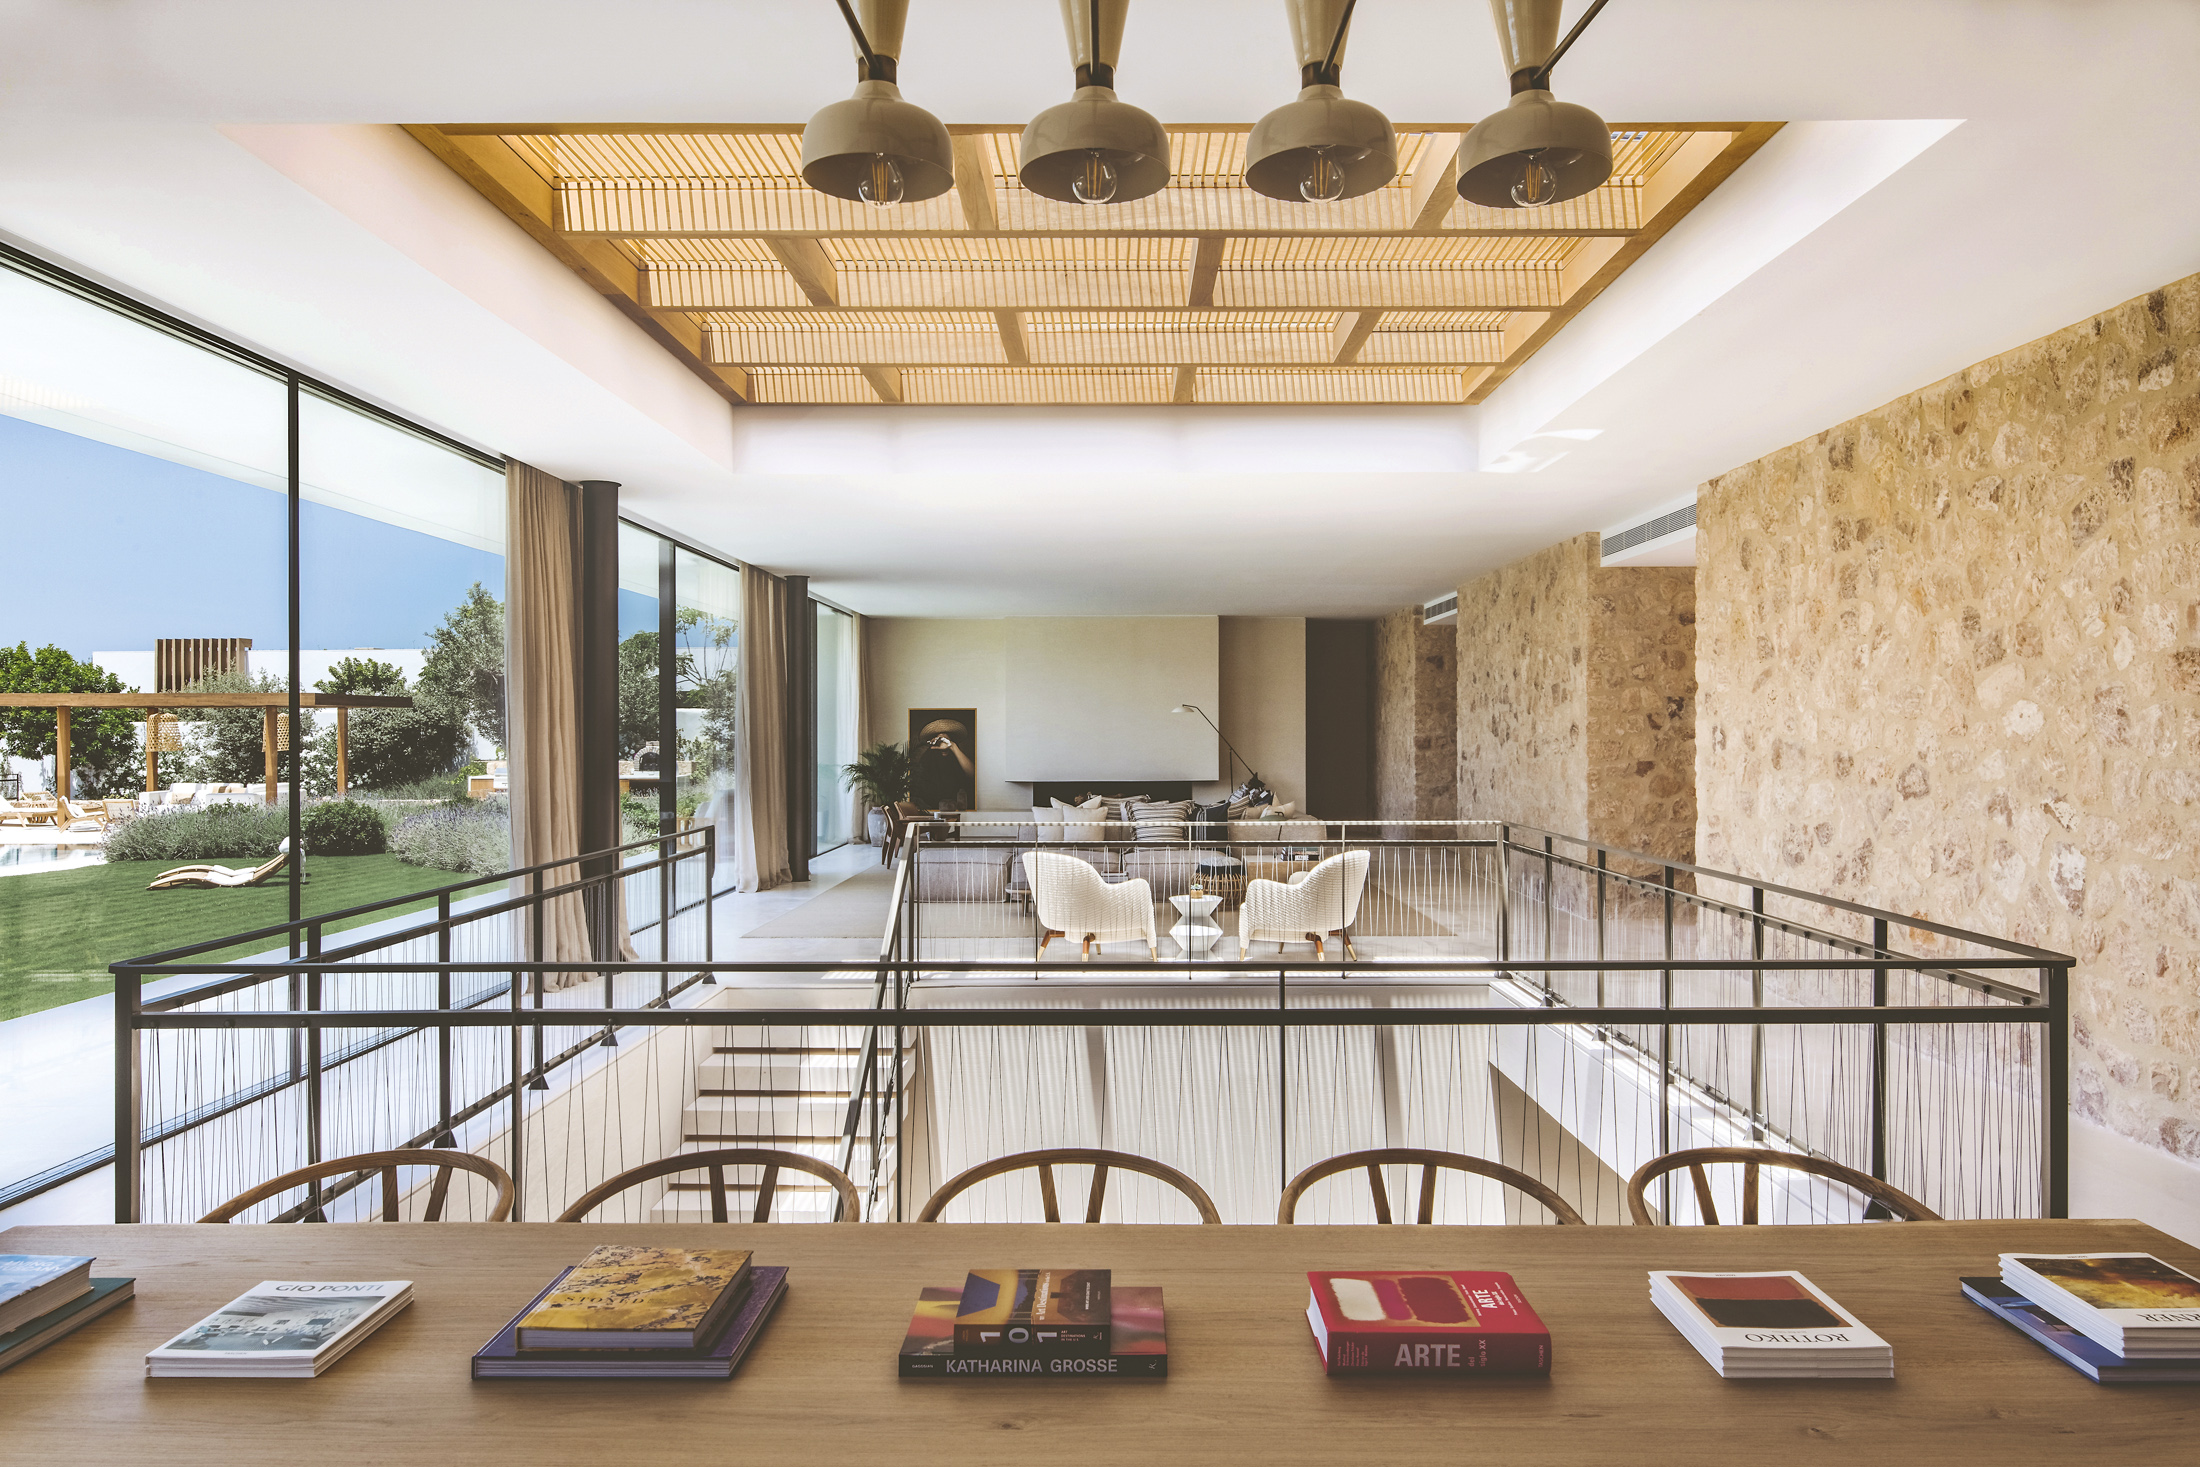 Living area designed by architect Estudio Vila 13 photographed by Ana Lui